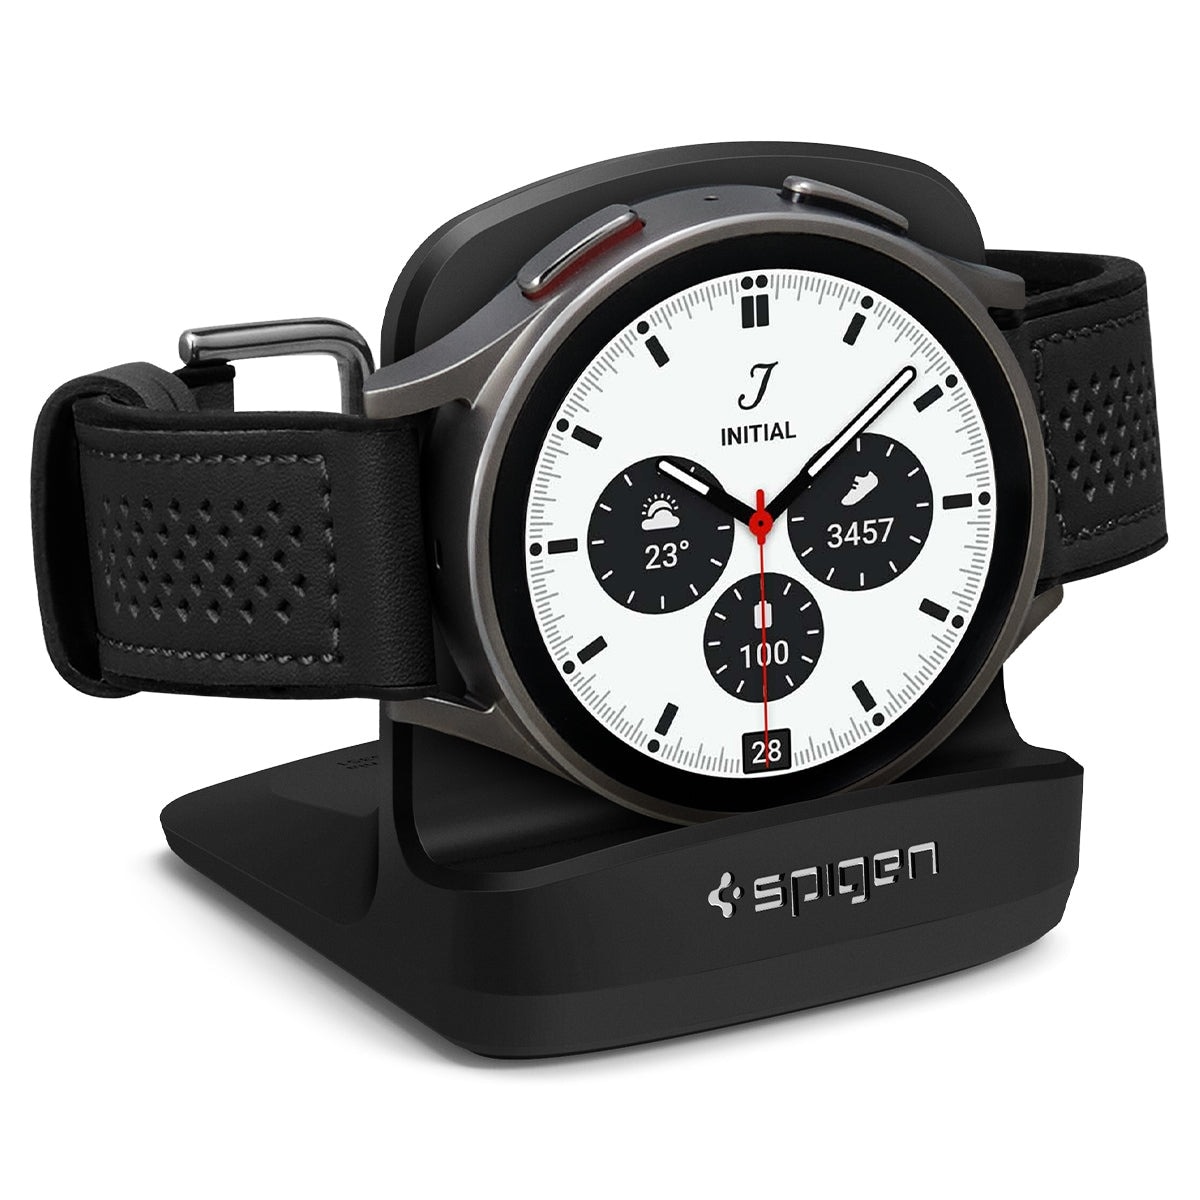 Samsung Galaxy Watches Night Stand S353 Black